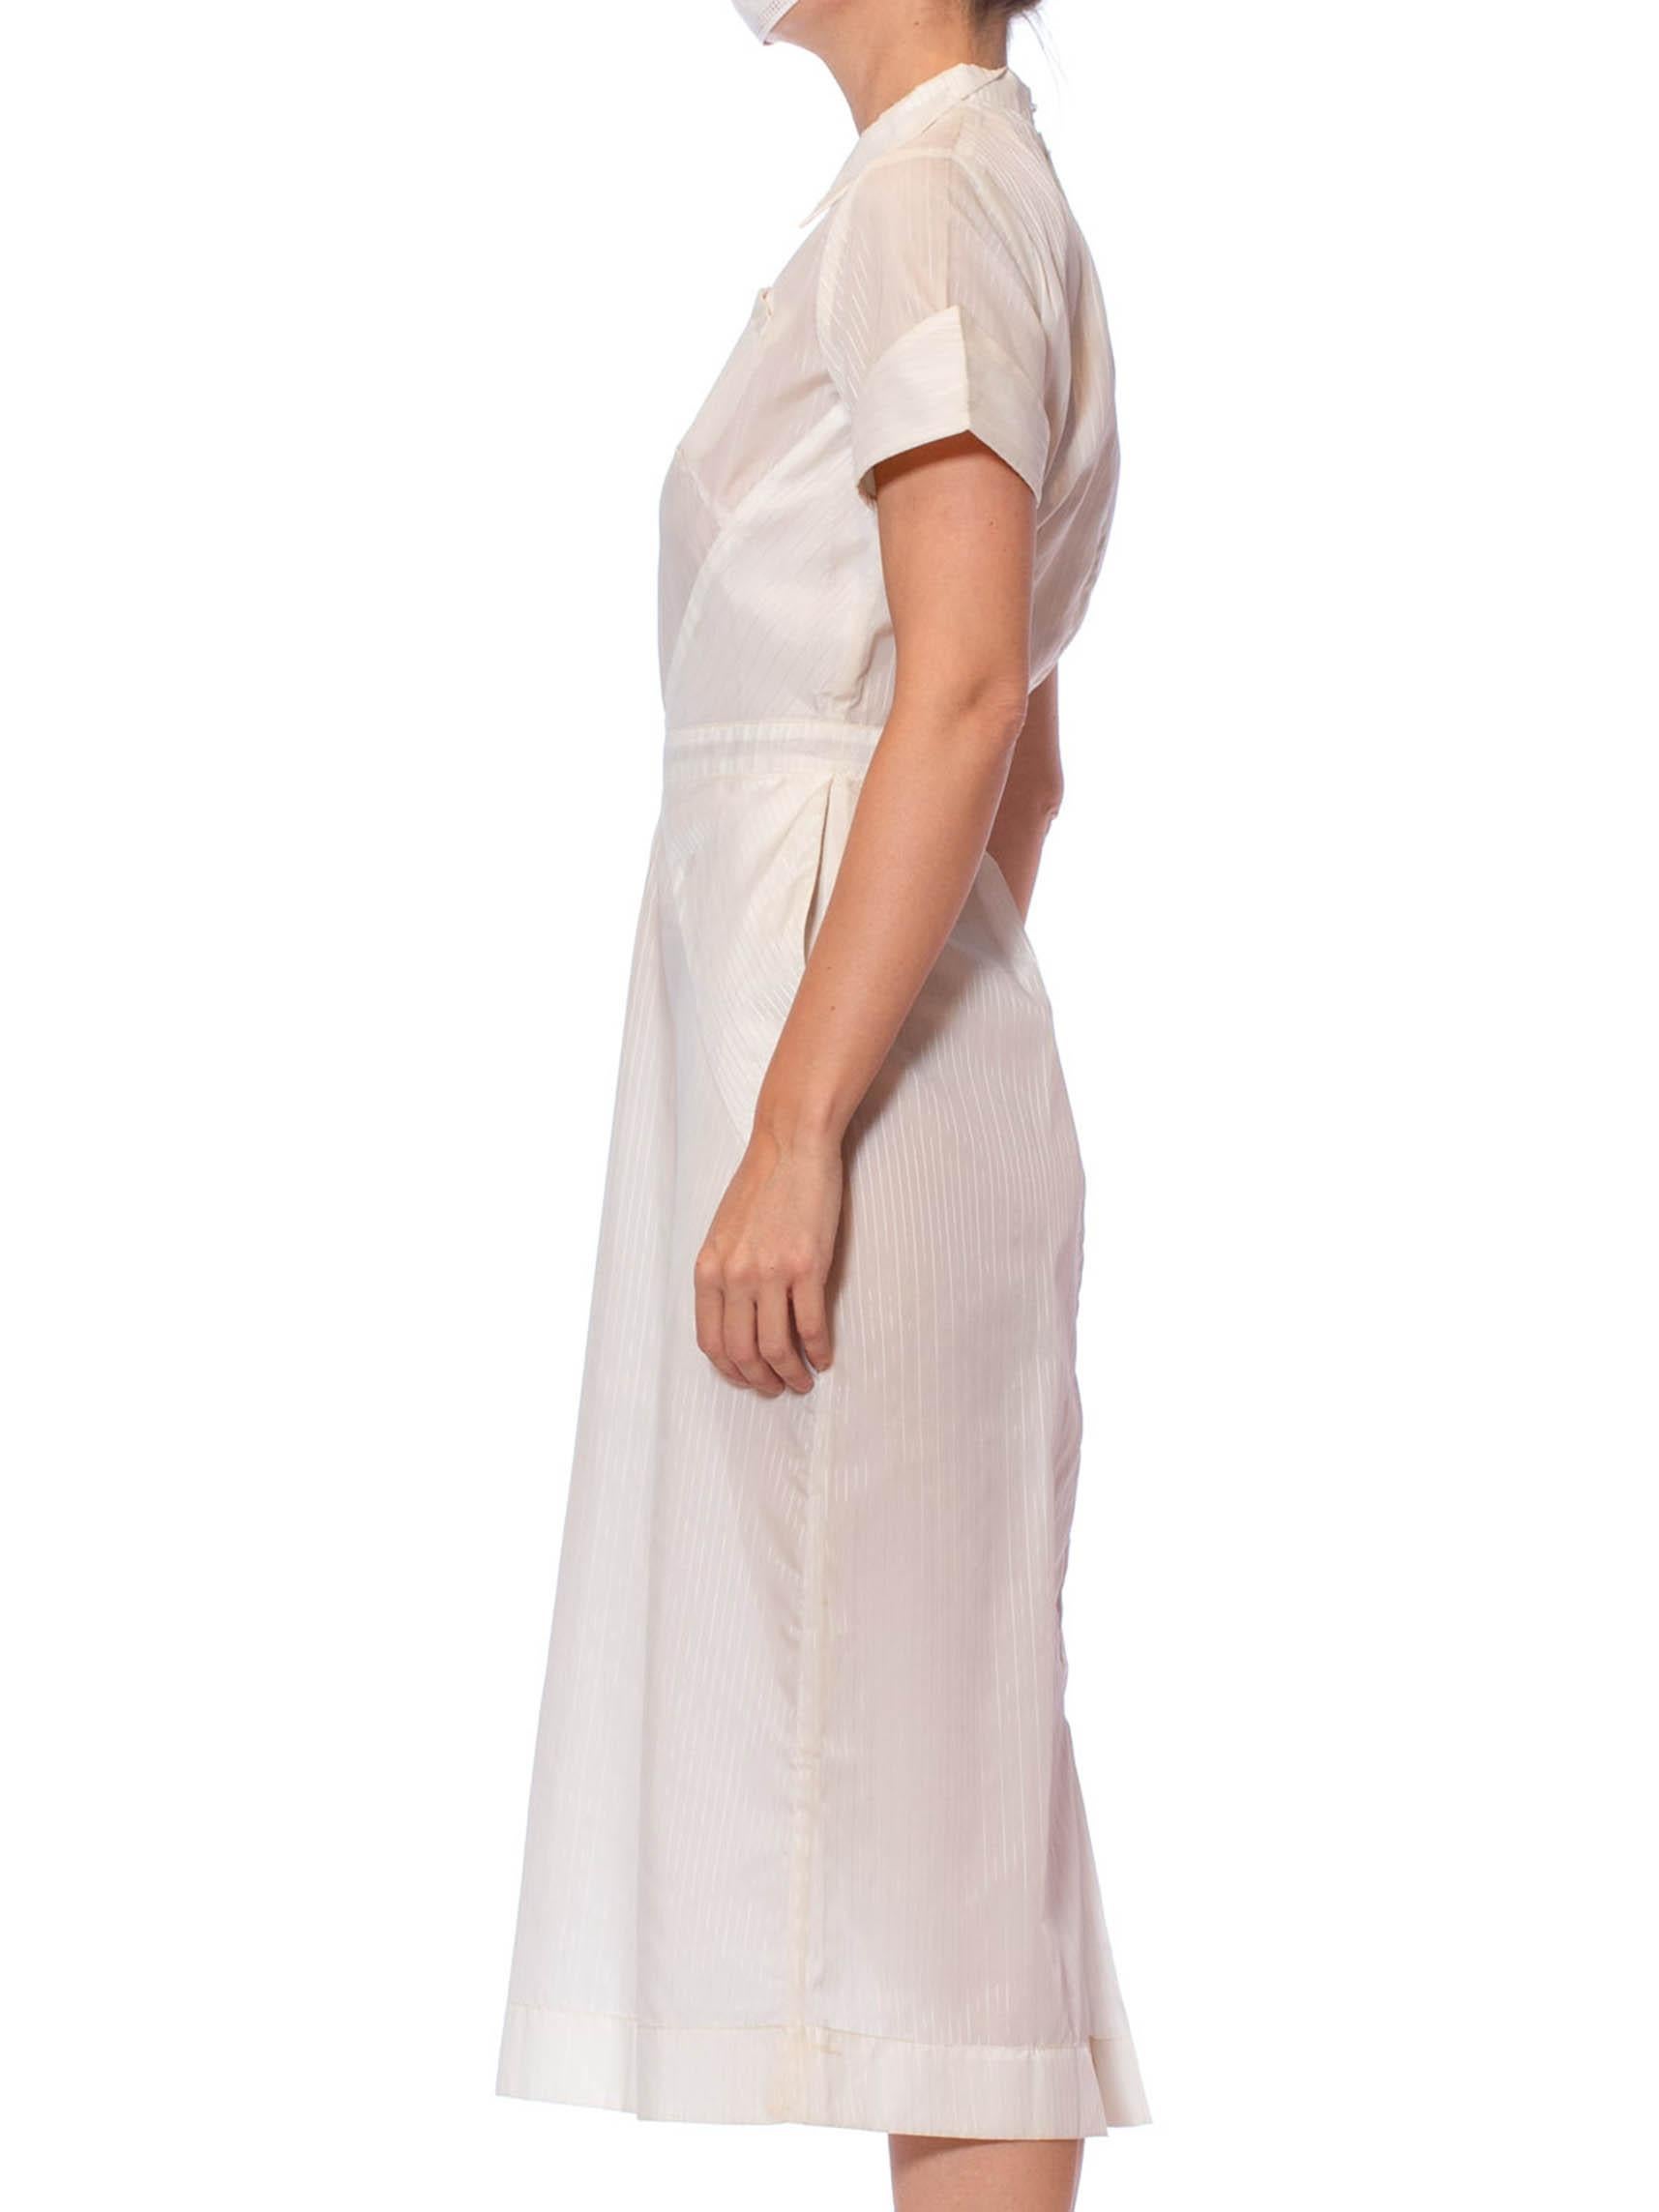 white nurse uniform dress